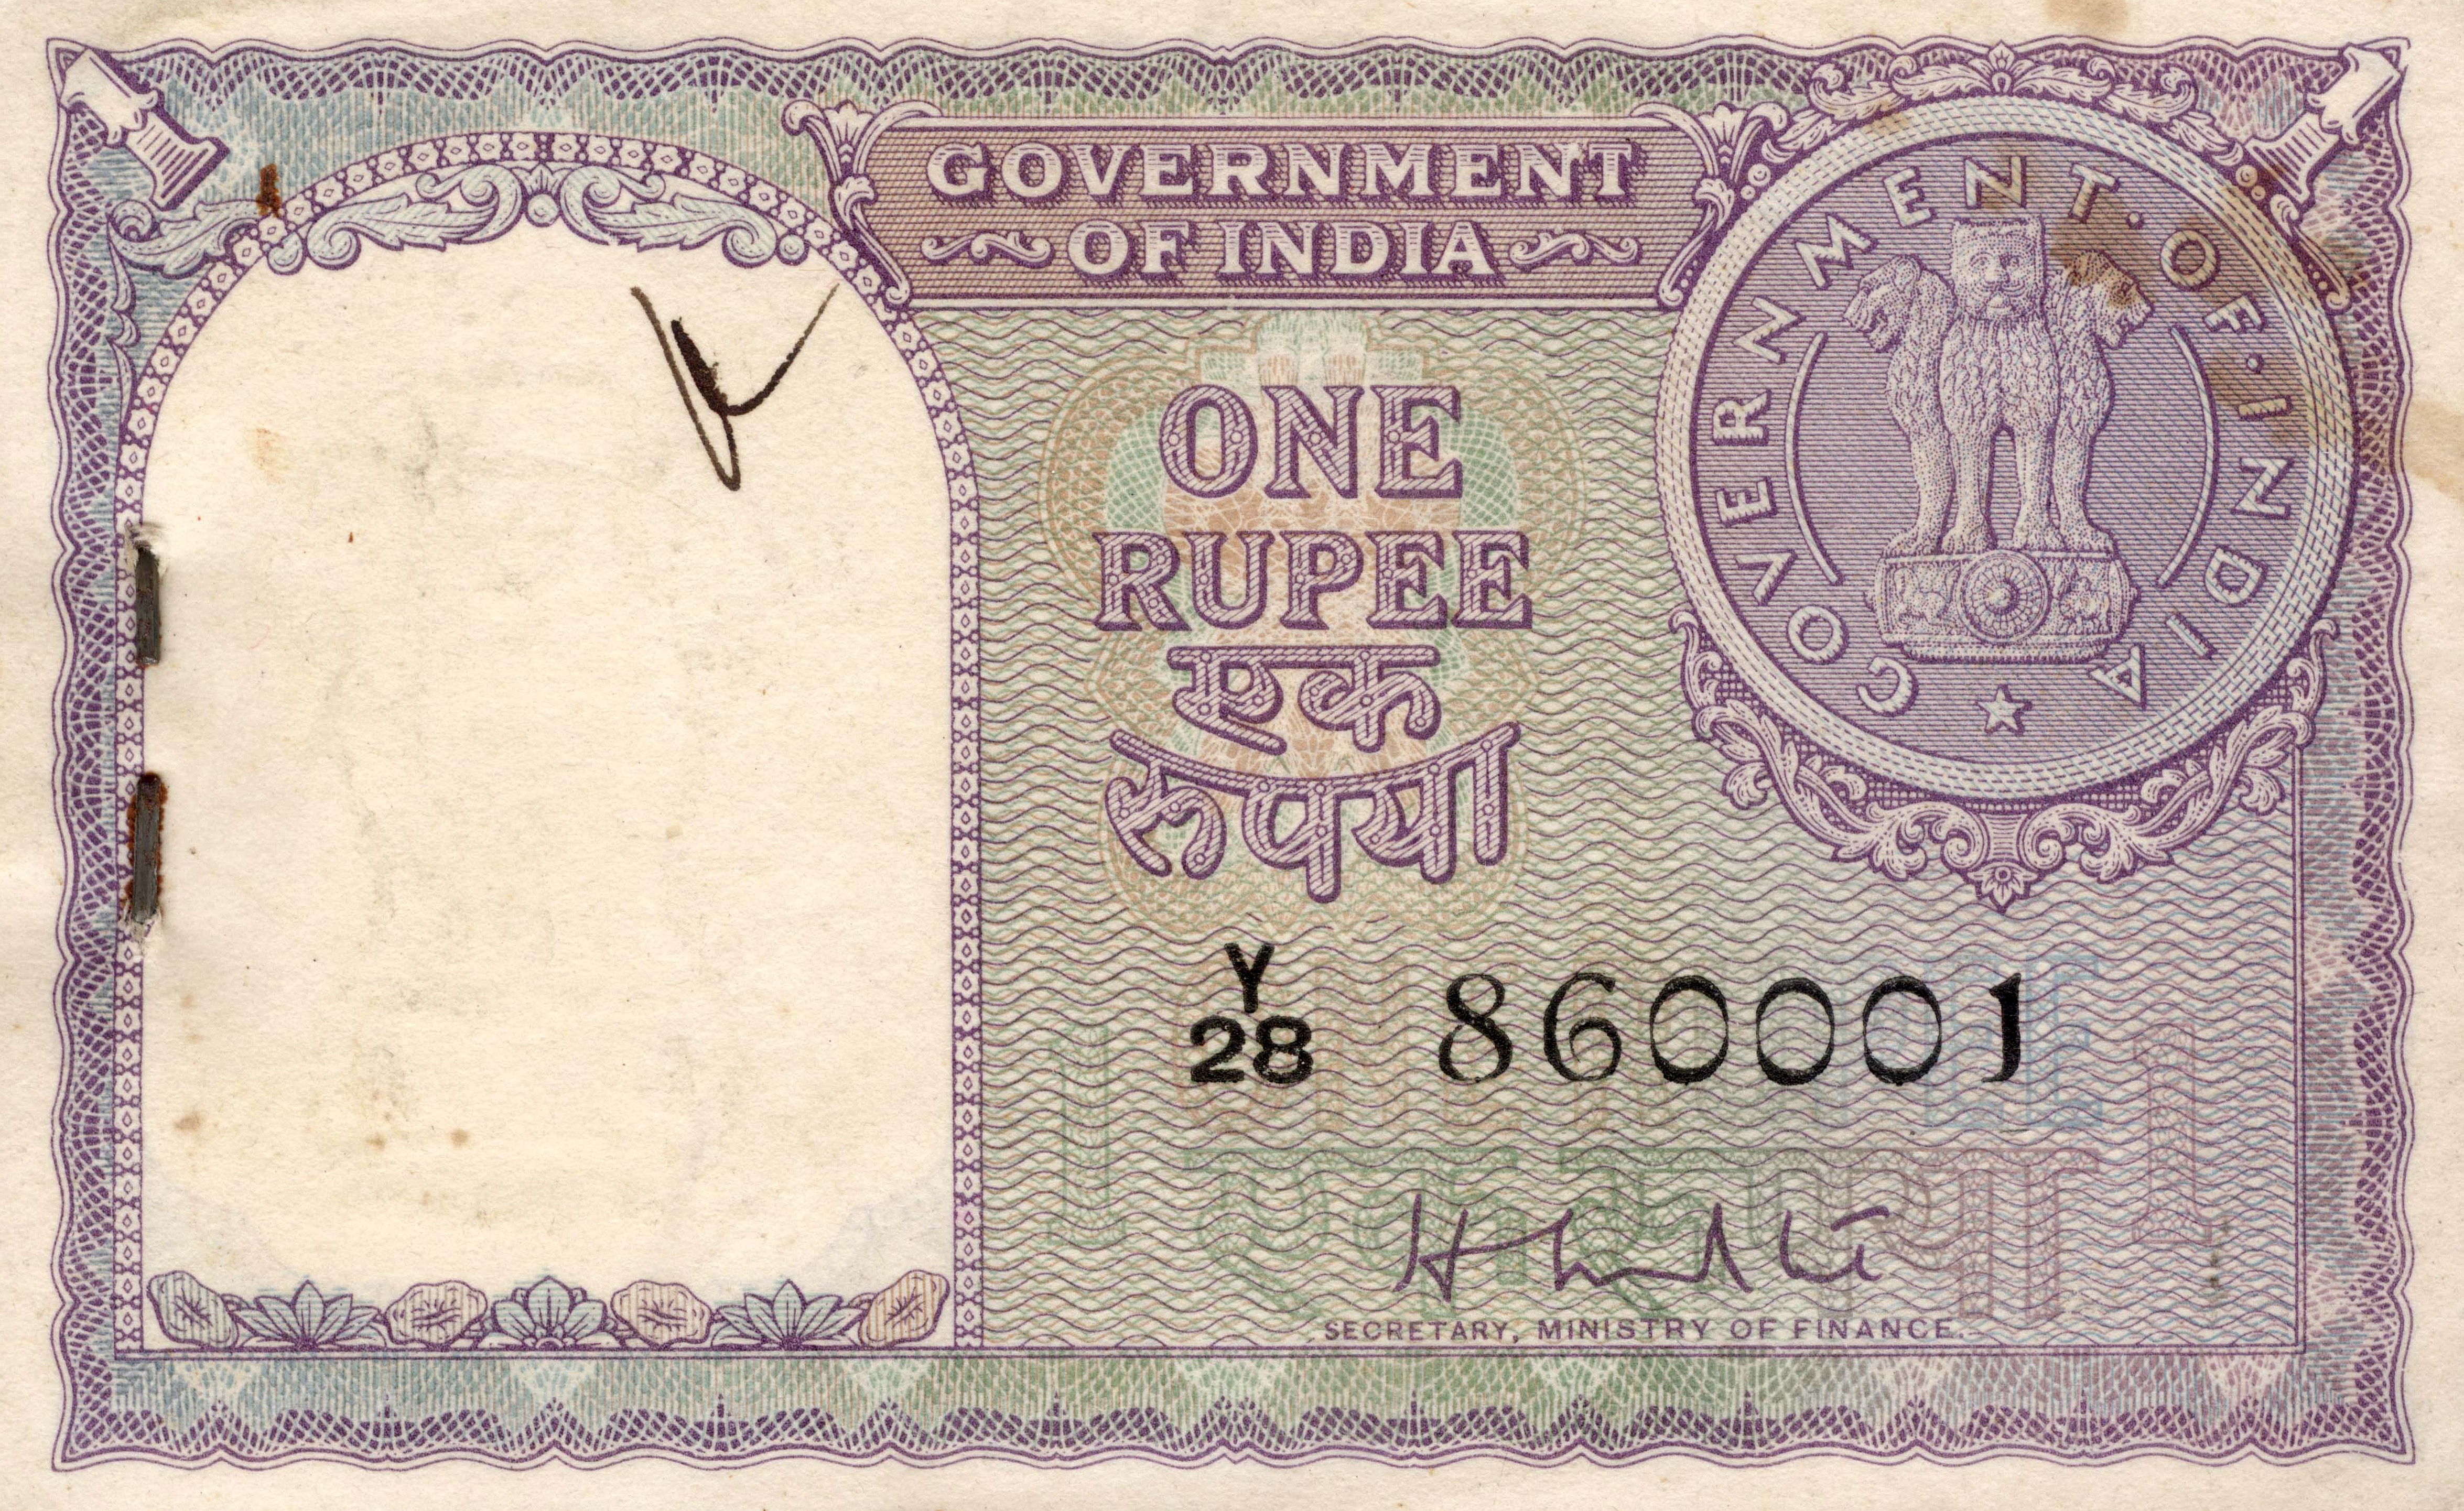 One Rupee Note 1995 - HD Wallpaper 